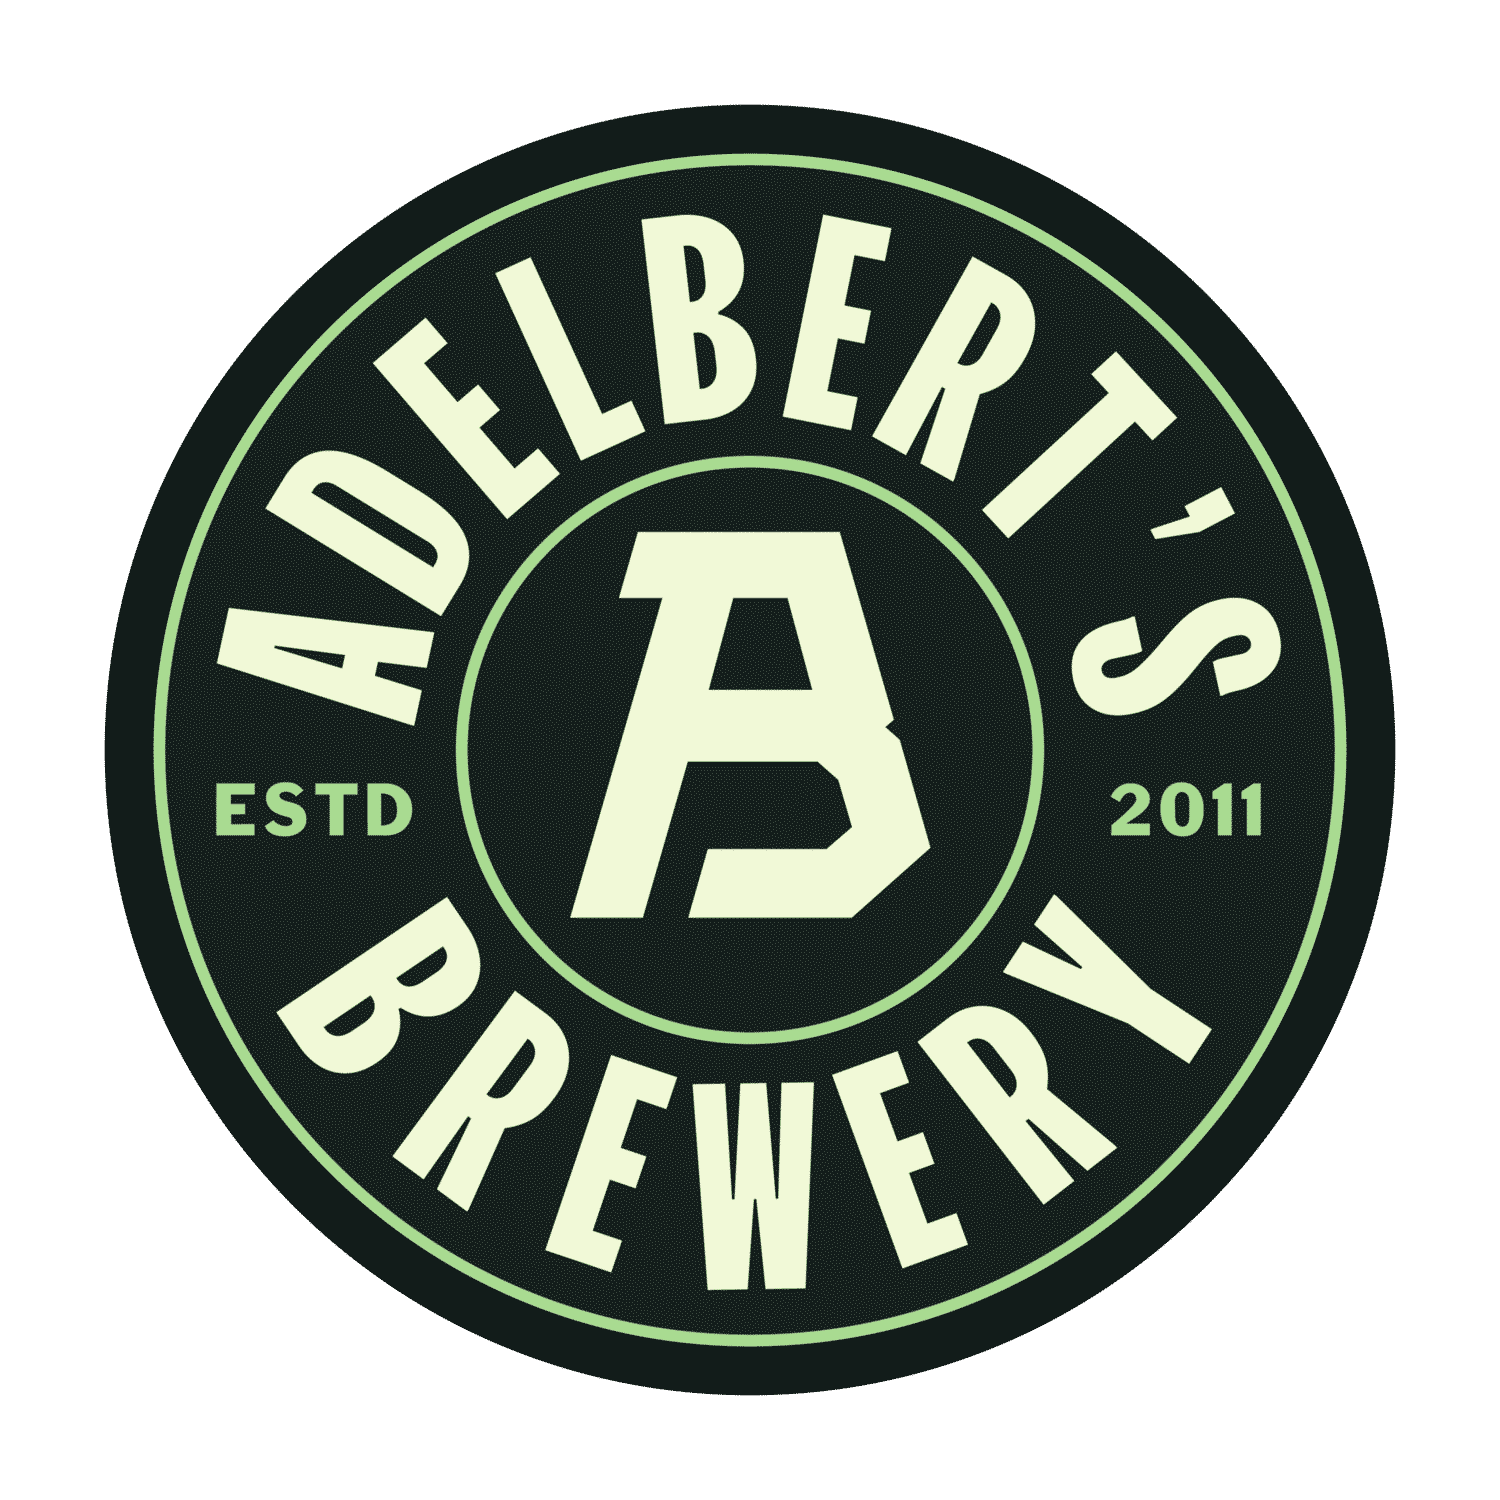 Adelbert’s Brewery LLC